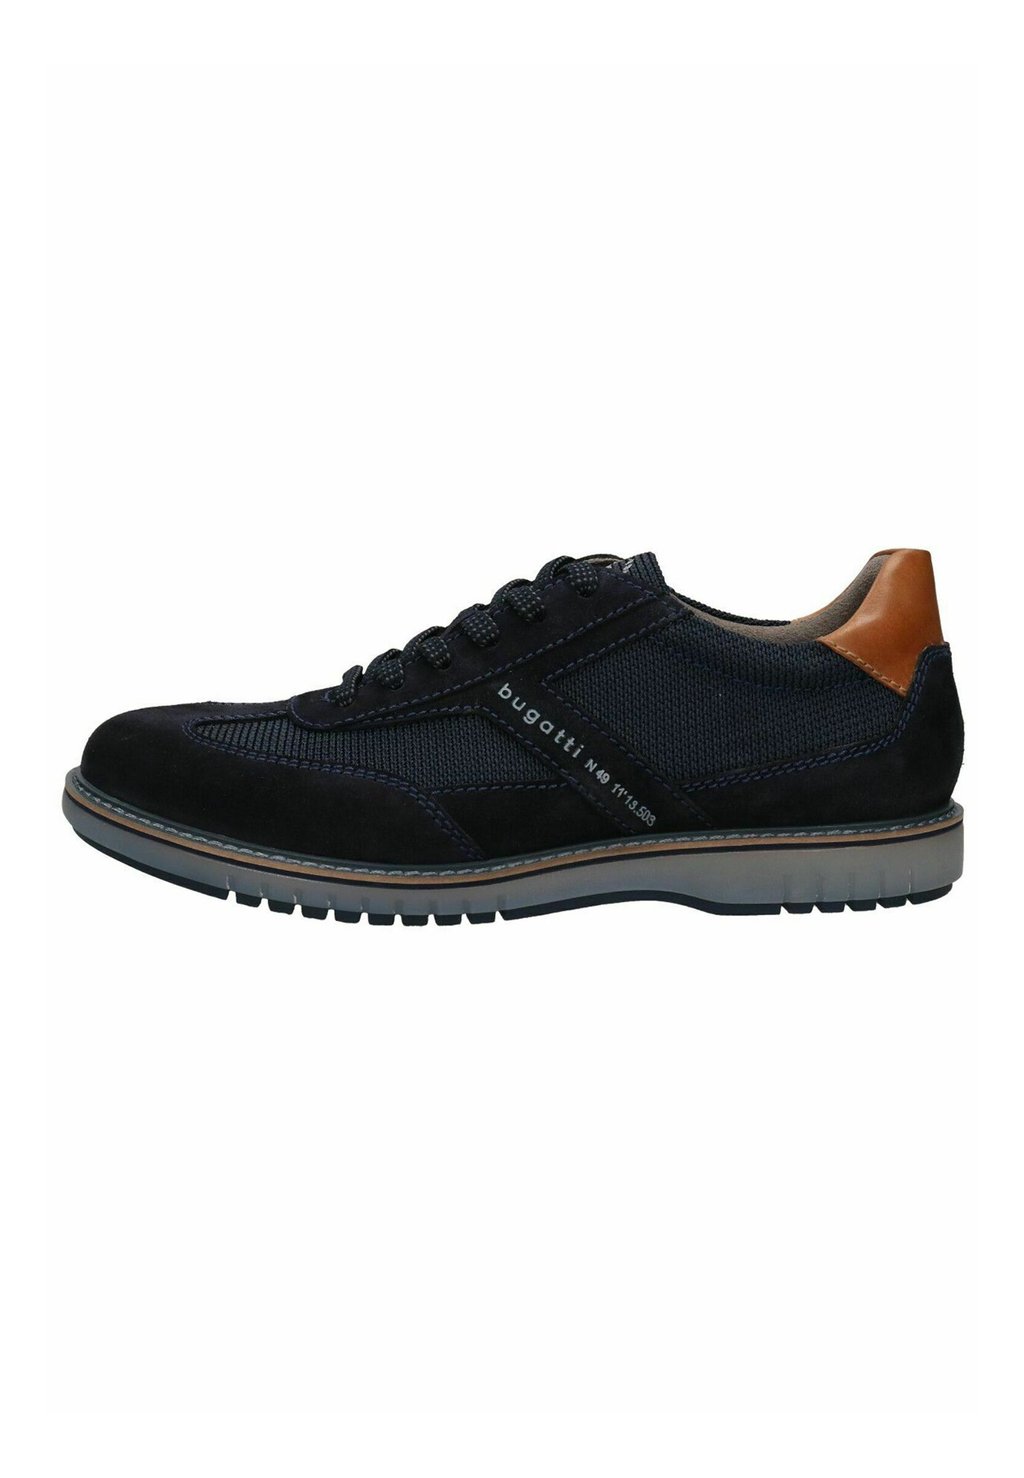 Спортивные туфли на шнуровке DERBIES bugatti, цвет dark blue dark blue подушка pictet fino rh76 dark blue 55019